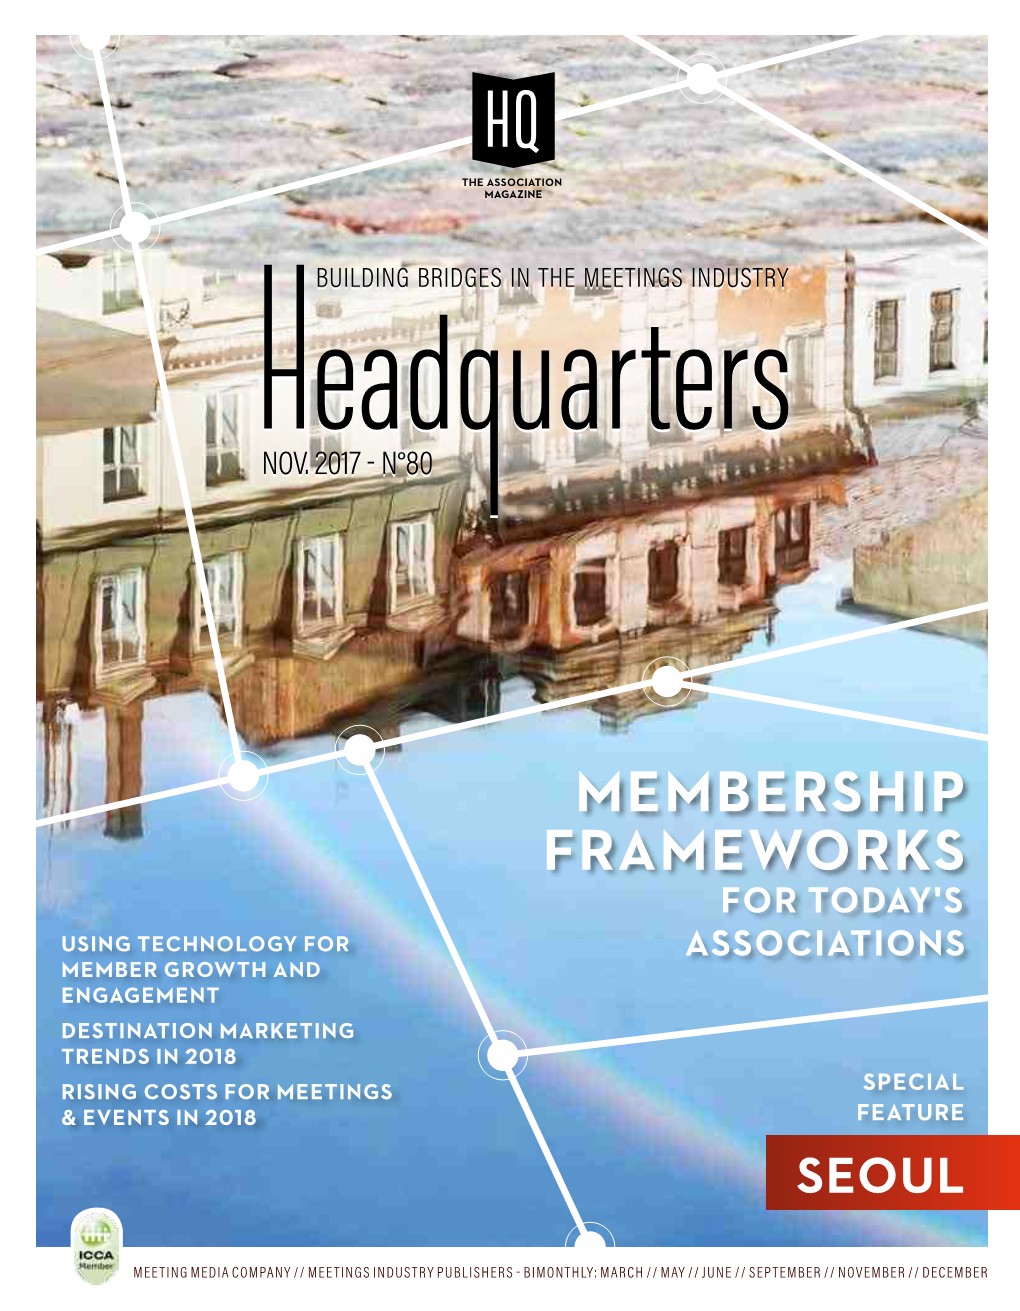 Membership Frameworks